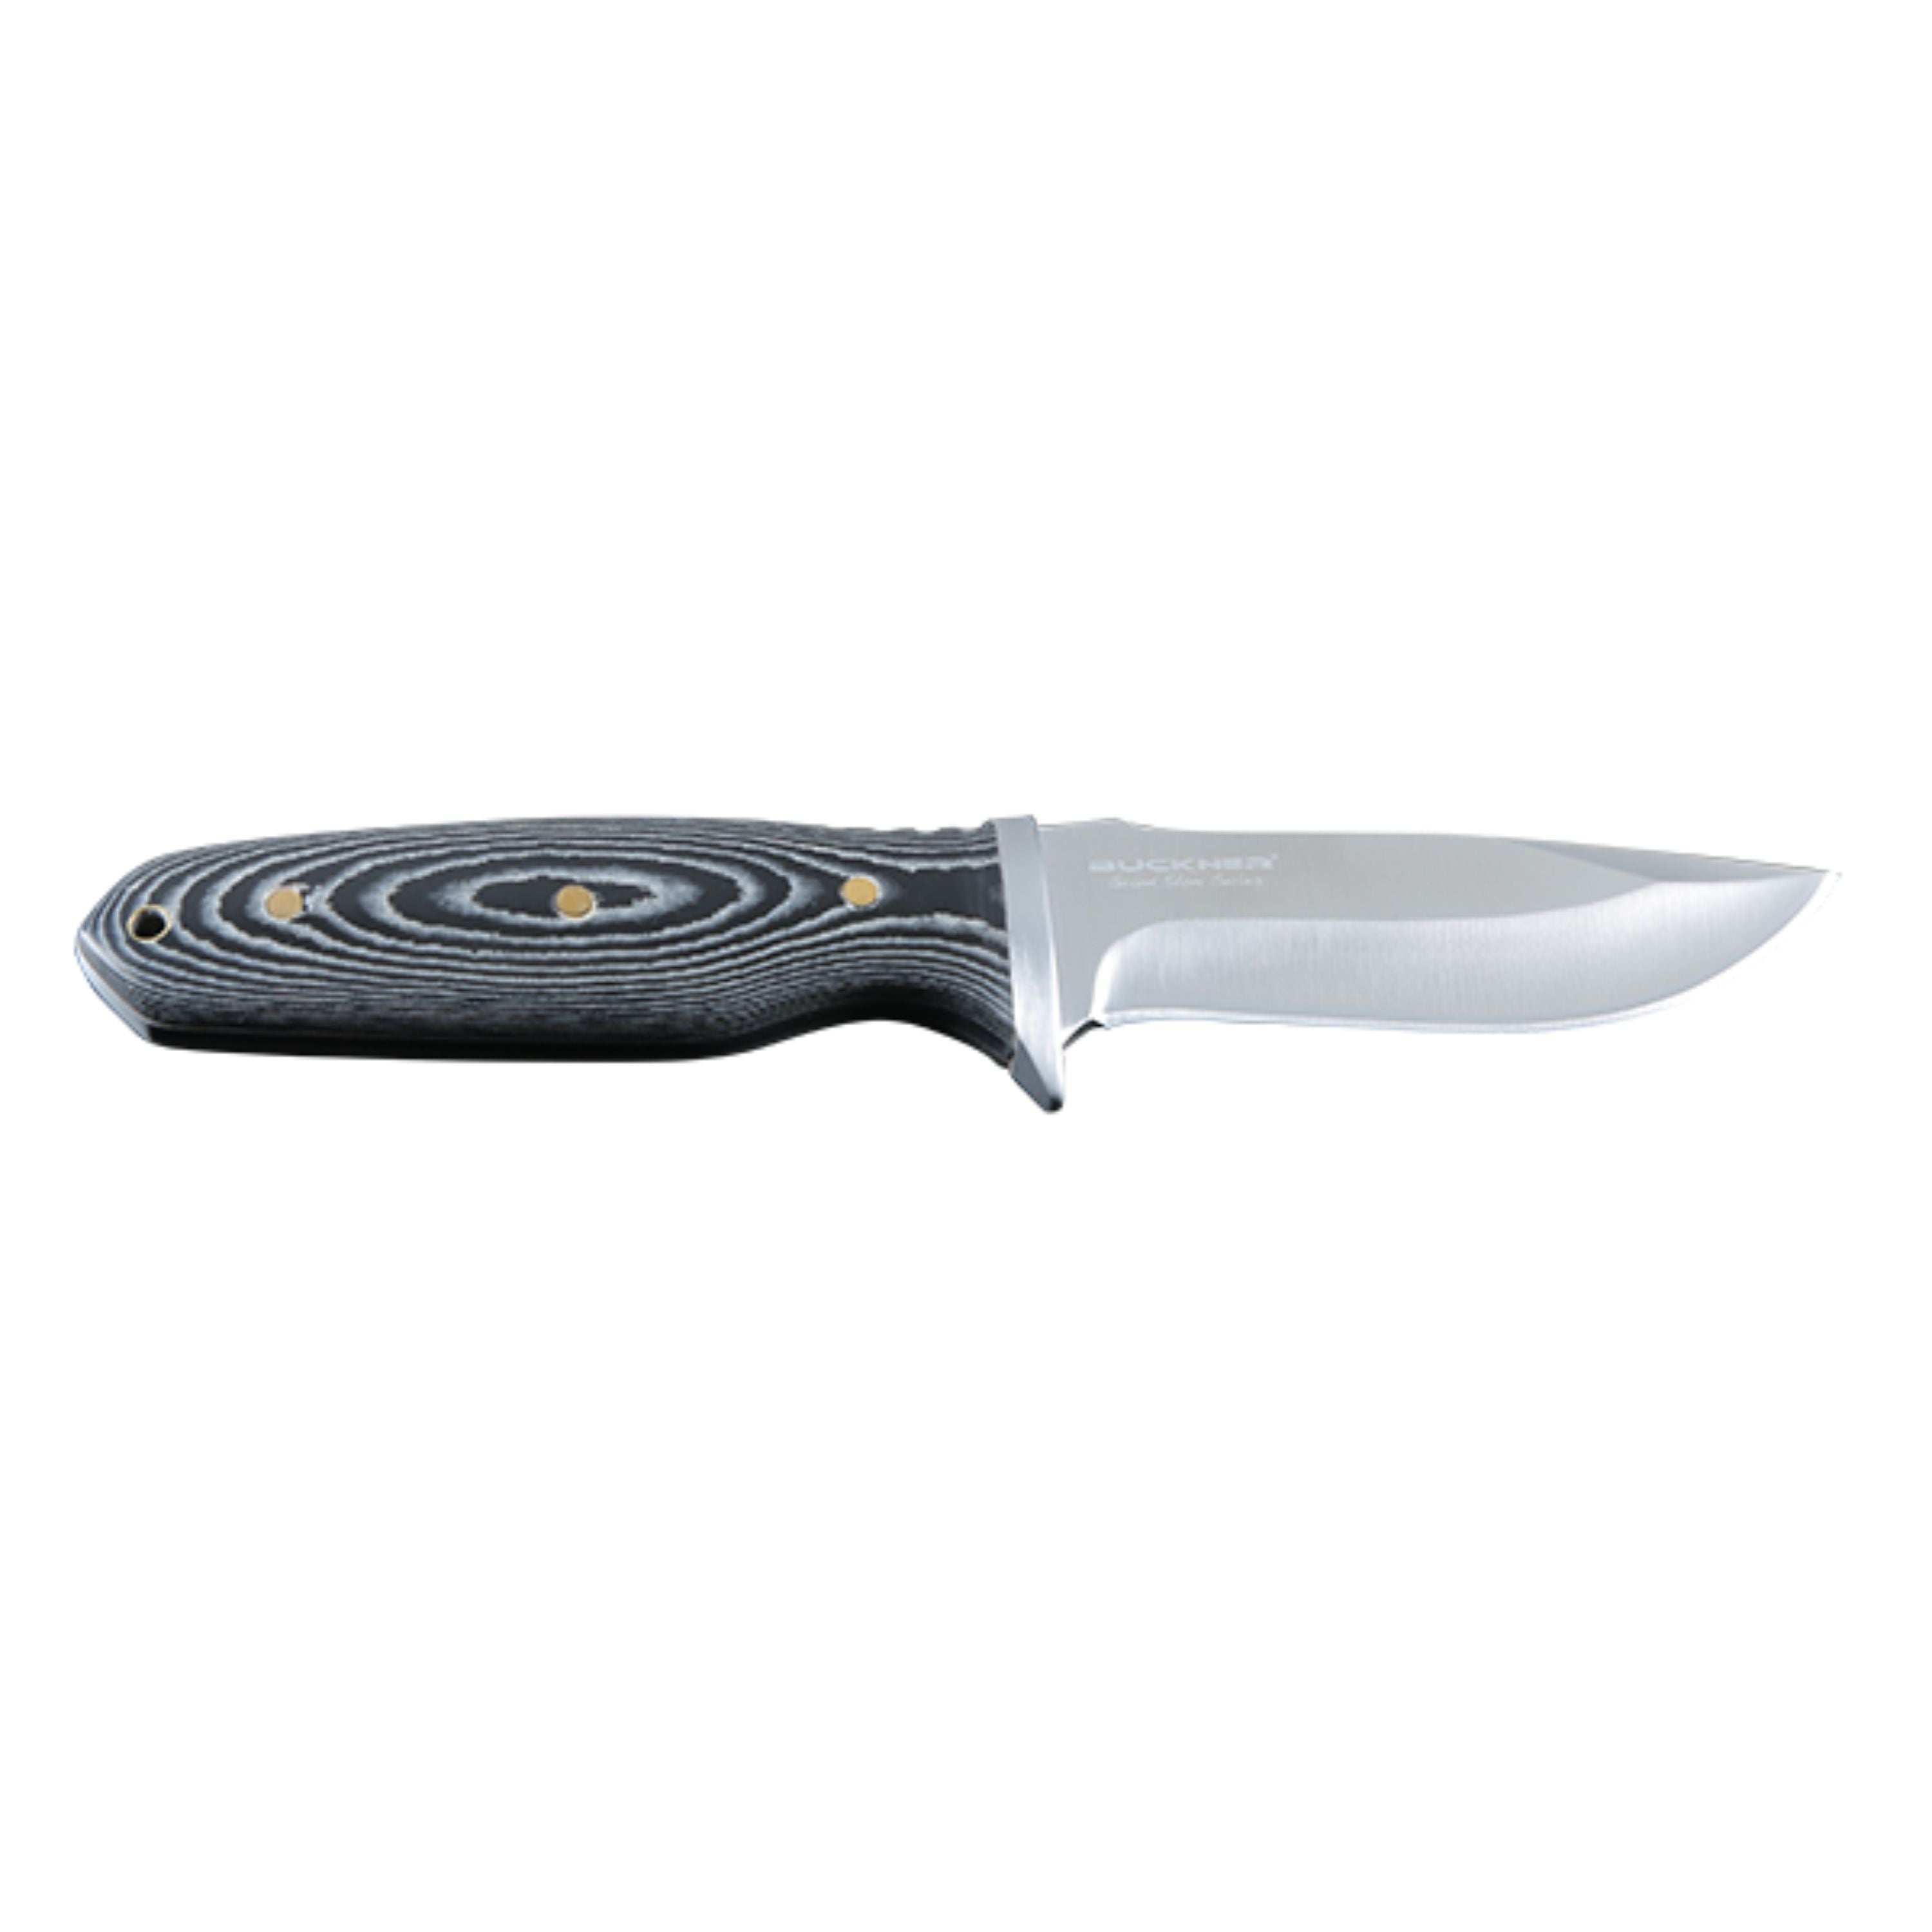 Couteau de chasse "Vanguard"||"Vanguard" hunting knife